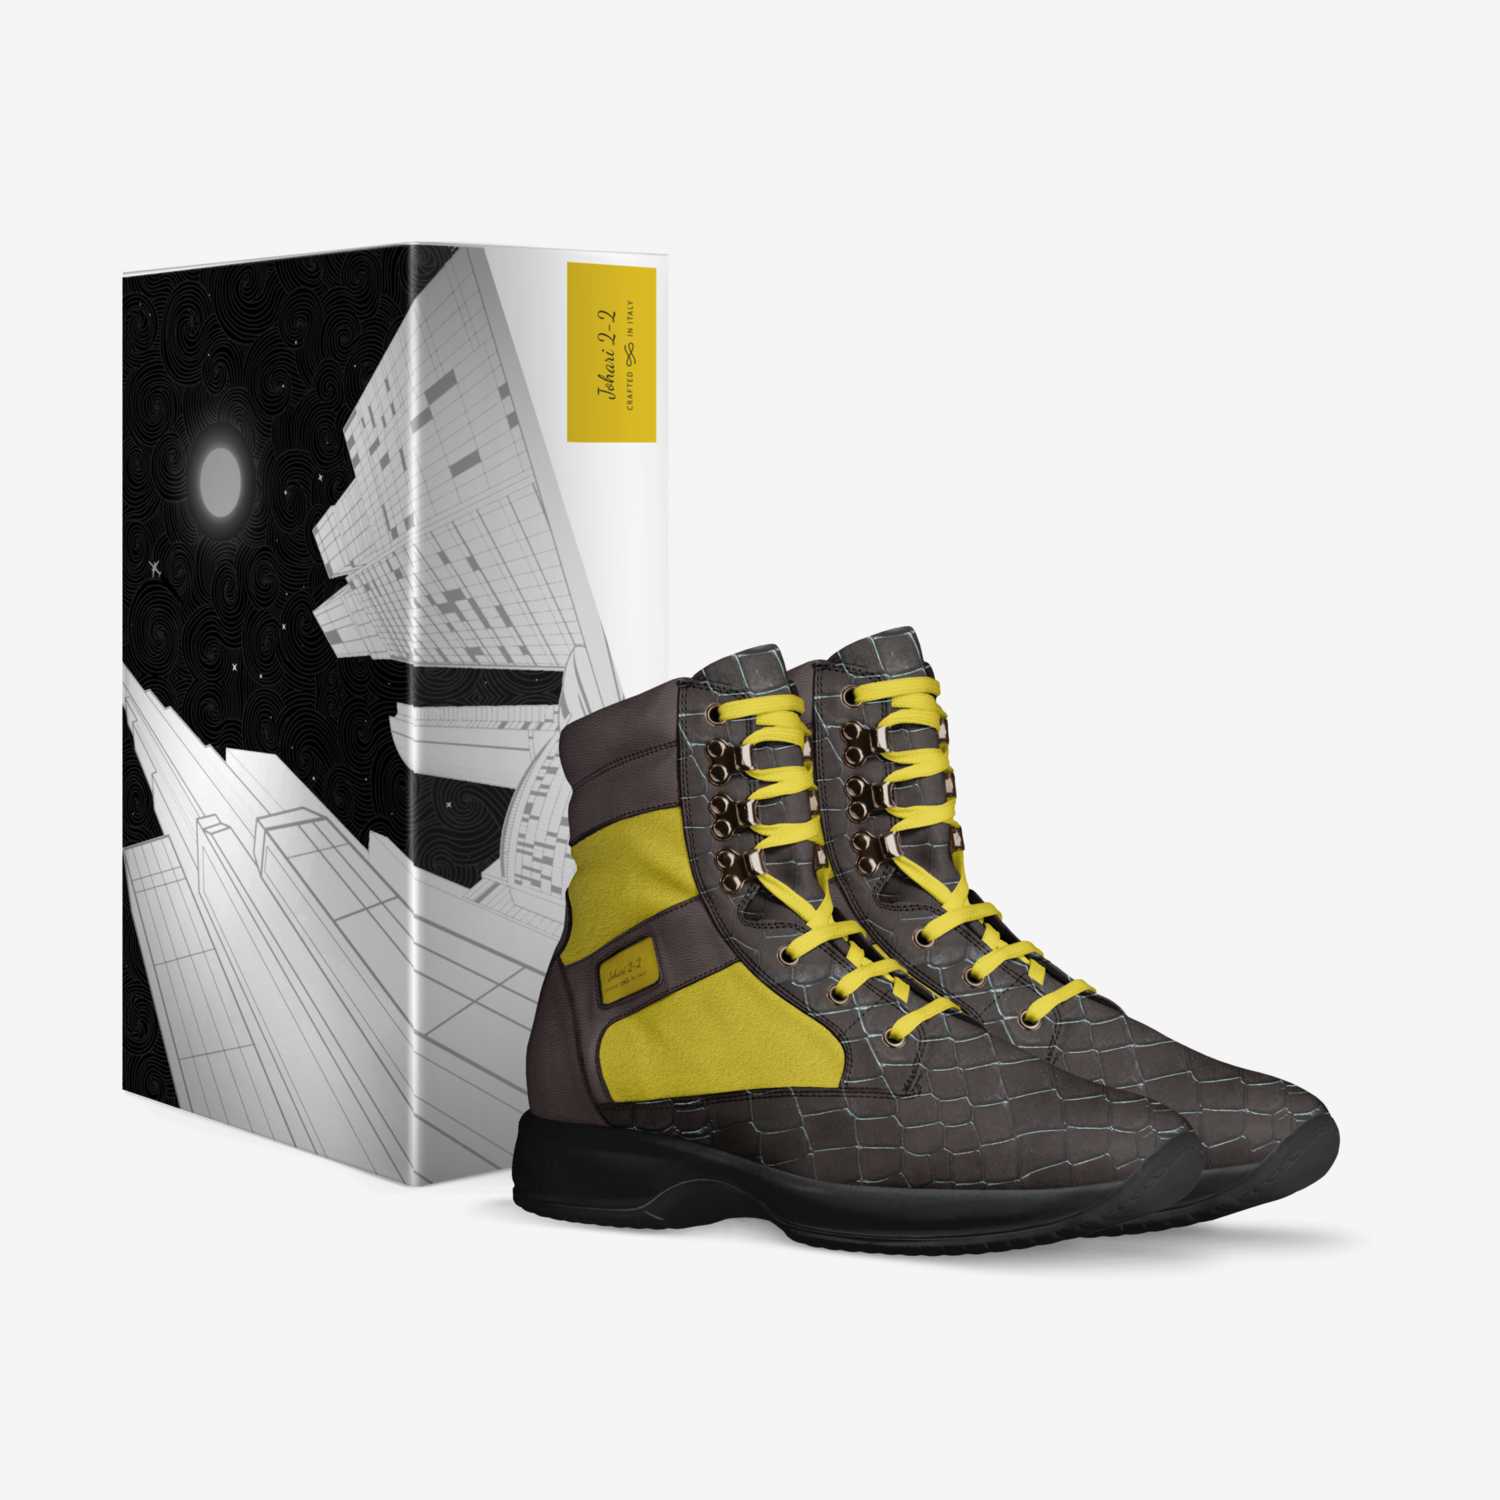 Johari 2-2 custom made in Italy shoes by Johari Concepts | Box view